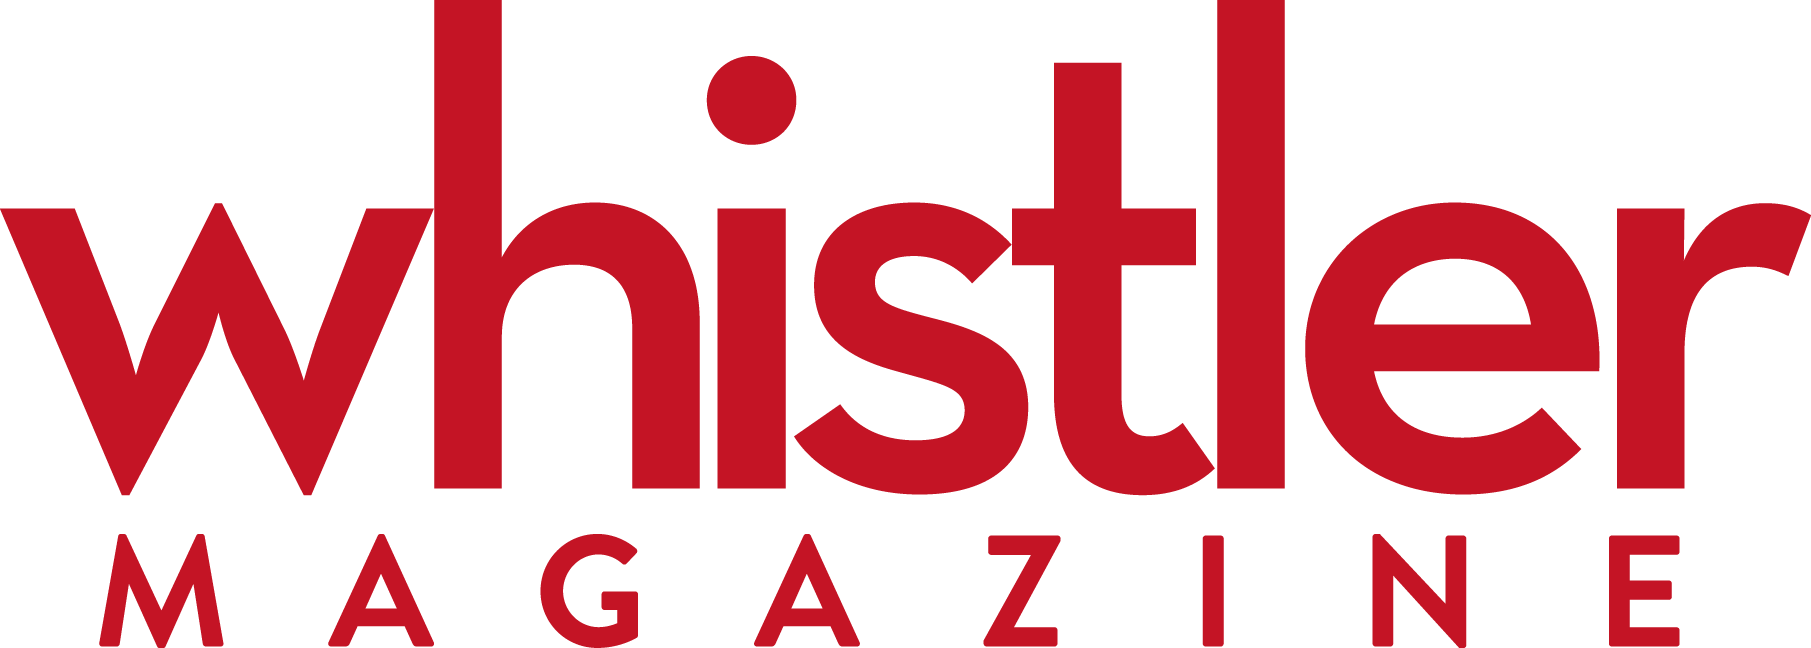 Whistler Magazine logo